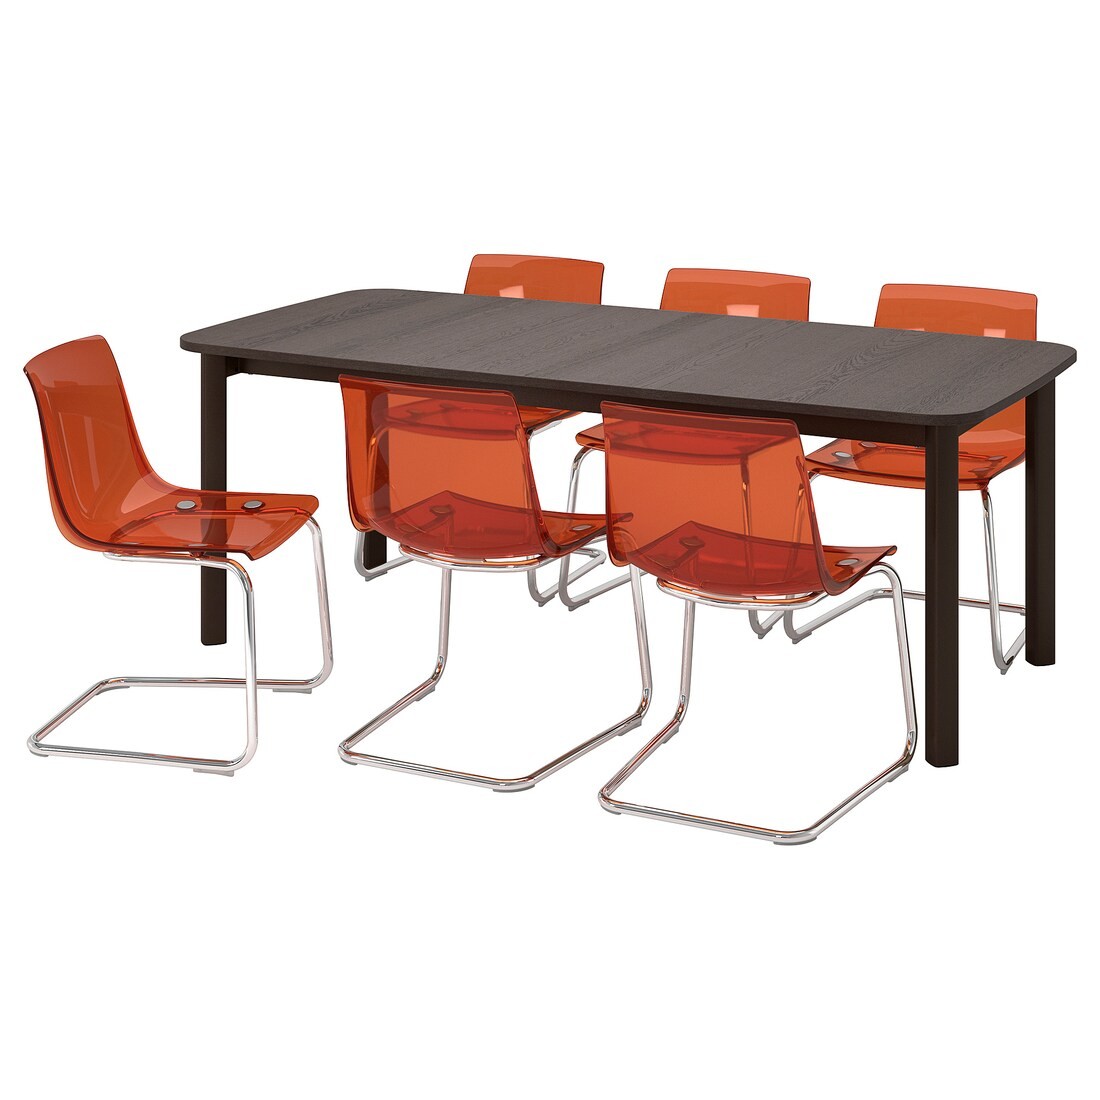 IKEA STRANDTORP / TOBIAS СТРАНДТОРП / ТОБИАС Стол и 6 стульев, коричневый / коричневый / красный хром, 150/205/260 cм 79484896 | 794.848.96